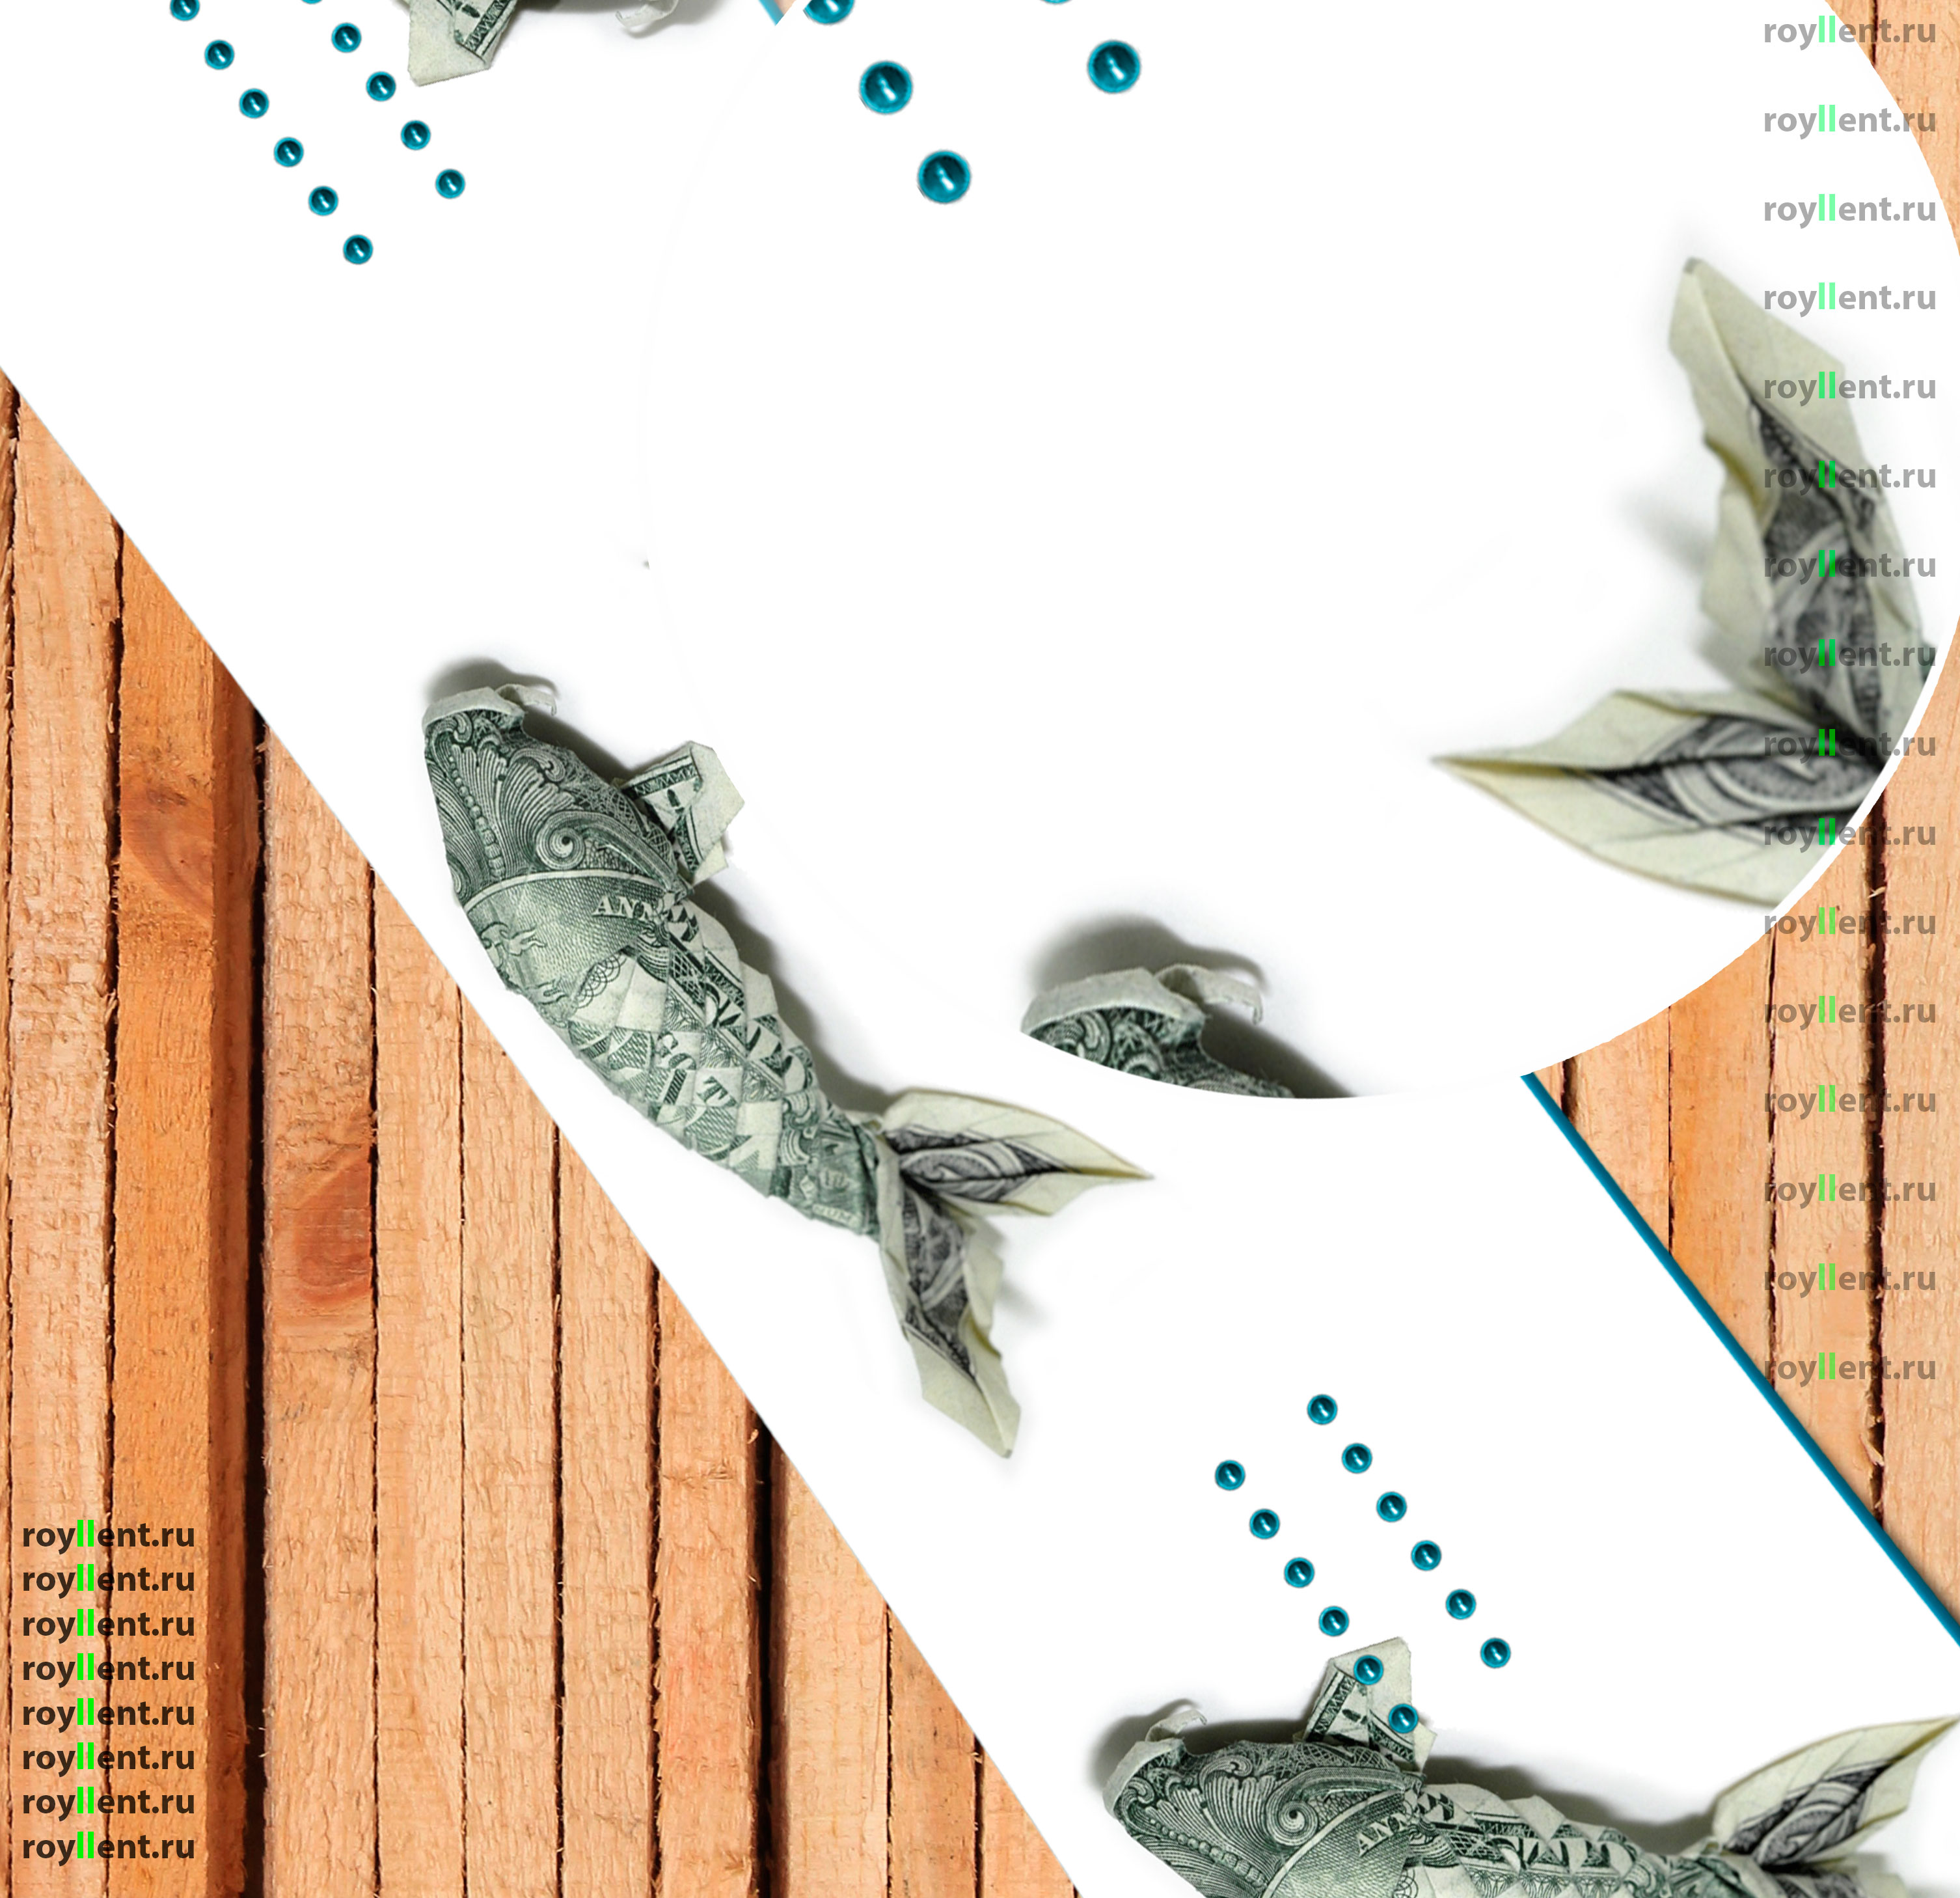 Дизайн сноуборда в стиле доллара рыбки приносит удачу